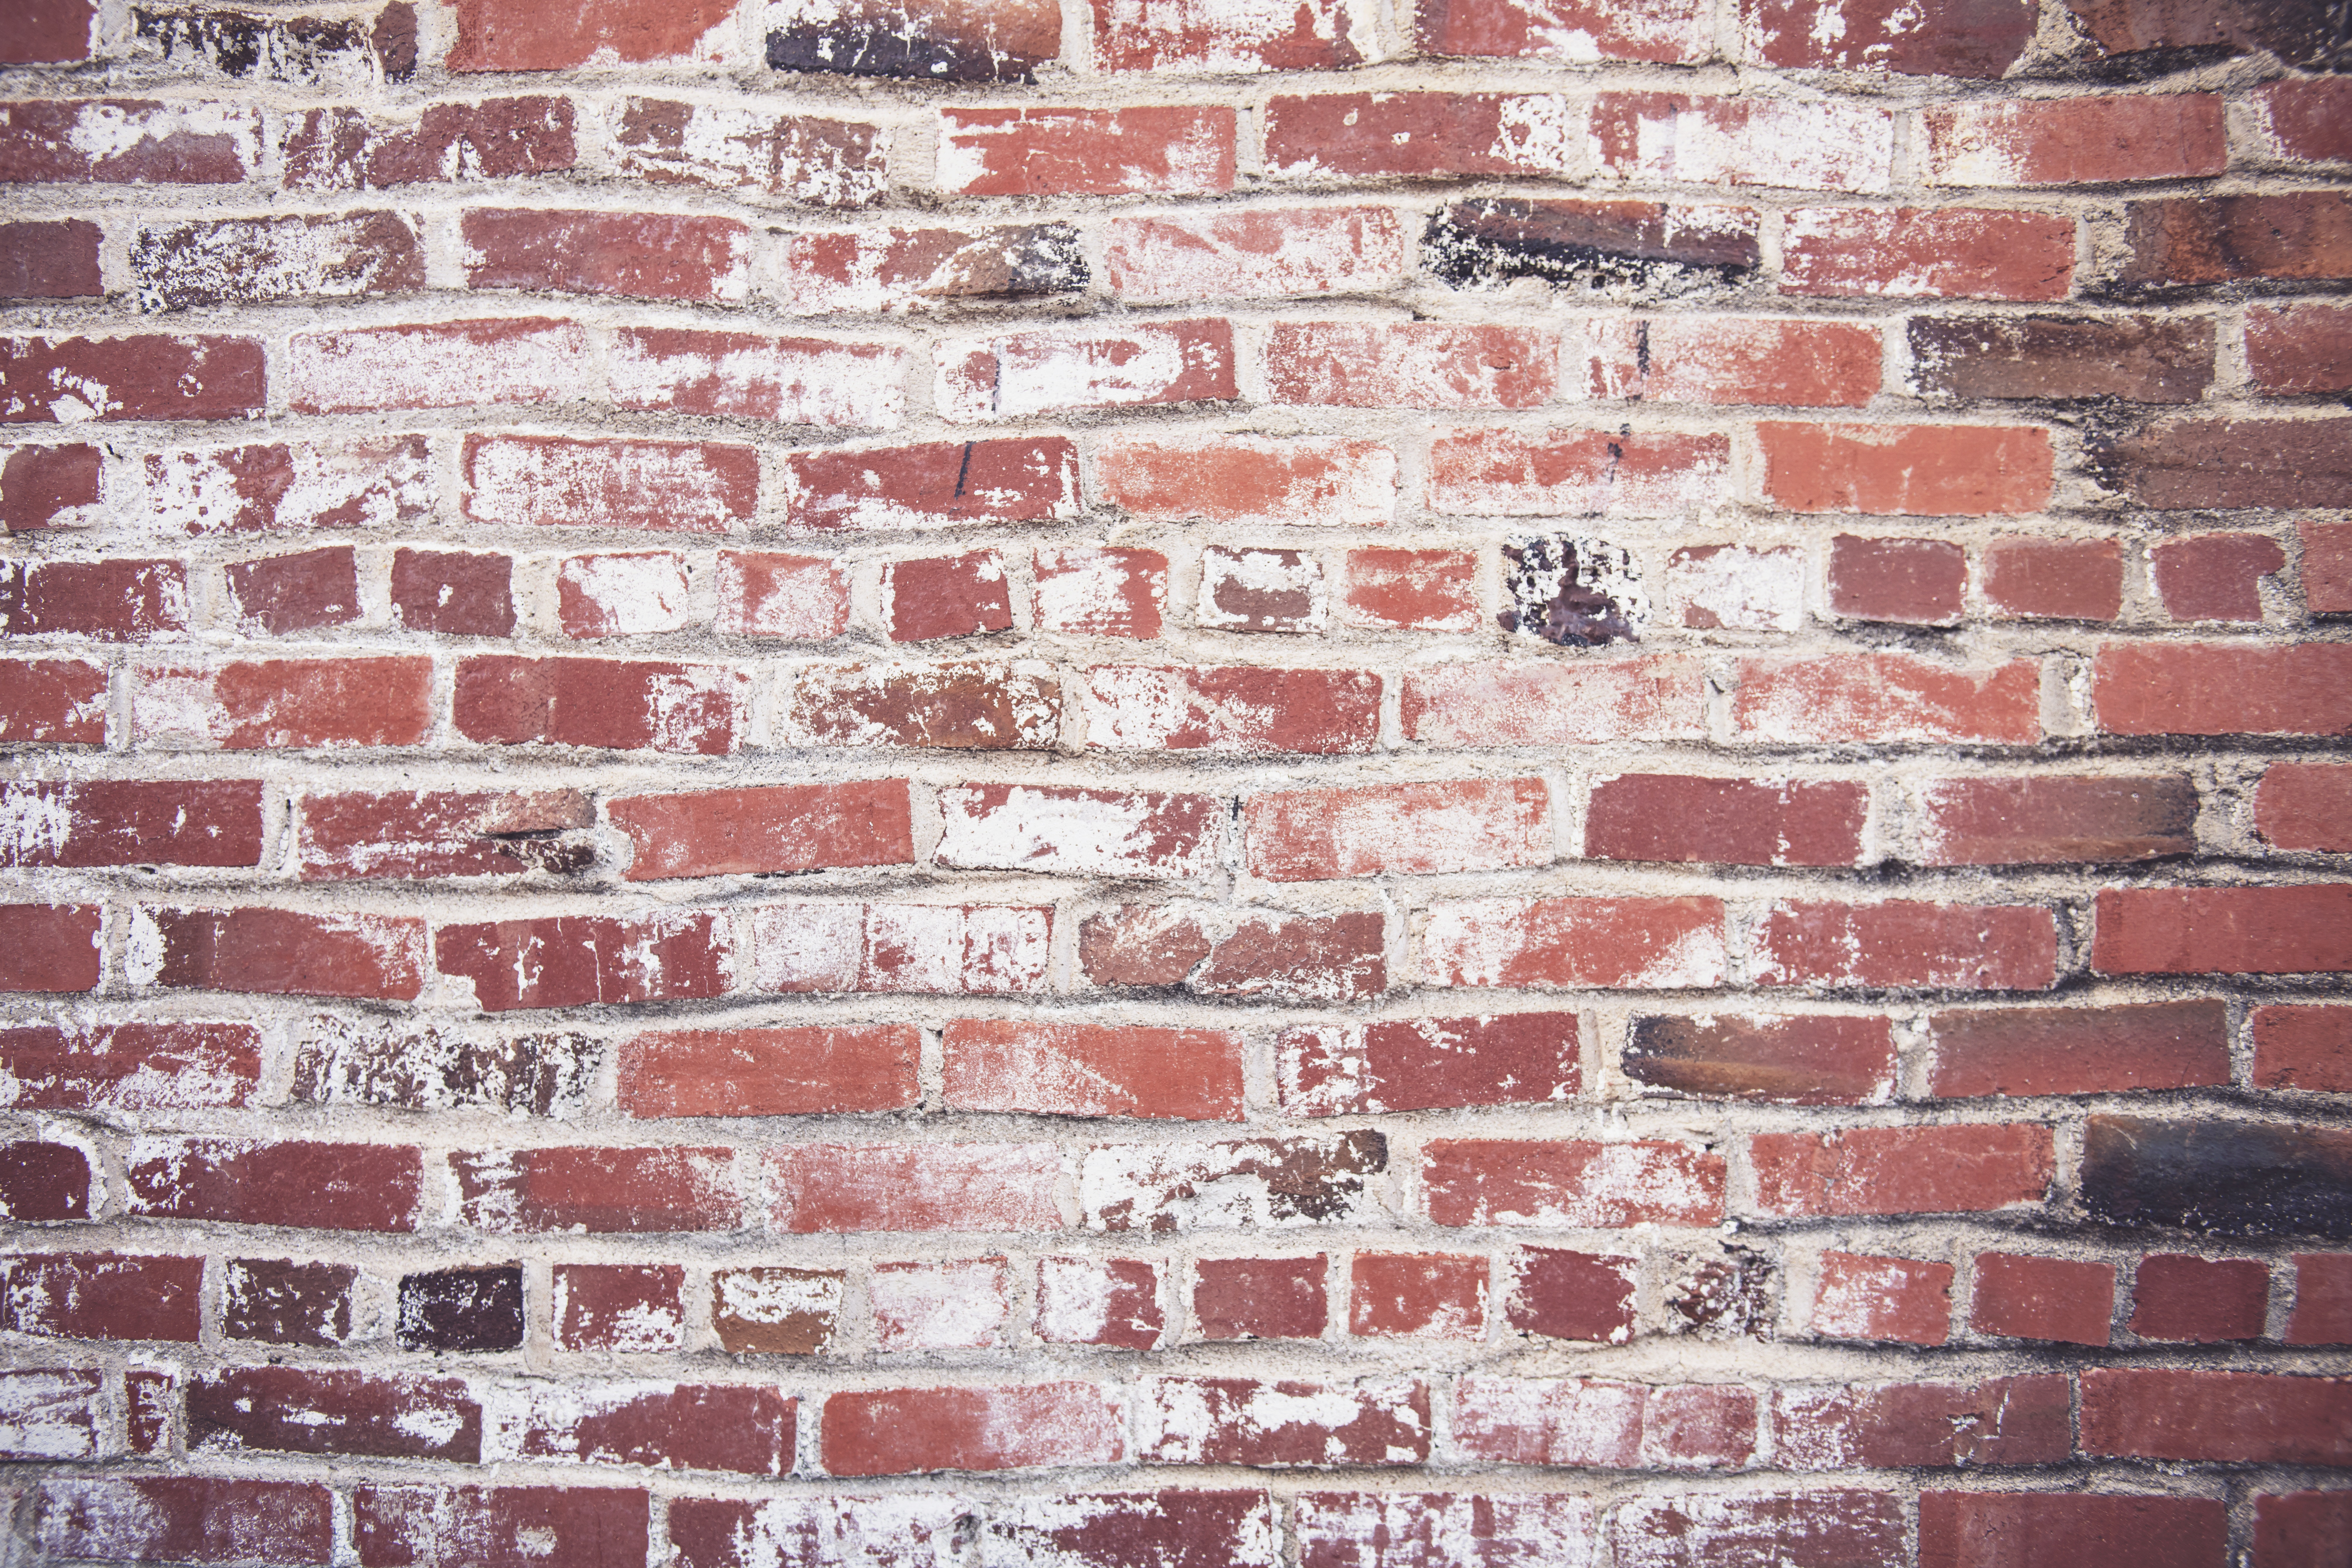 1000+ Interesting Brick Wall Photos · Pexels · Free Stock Photos